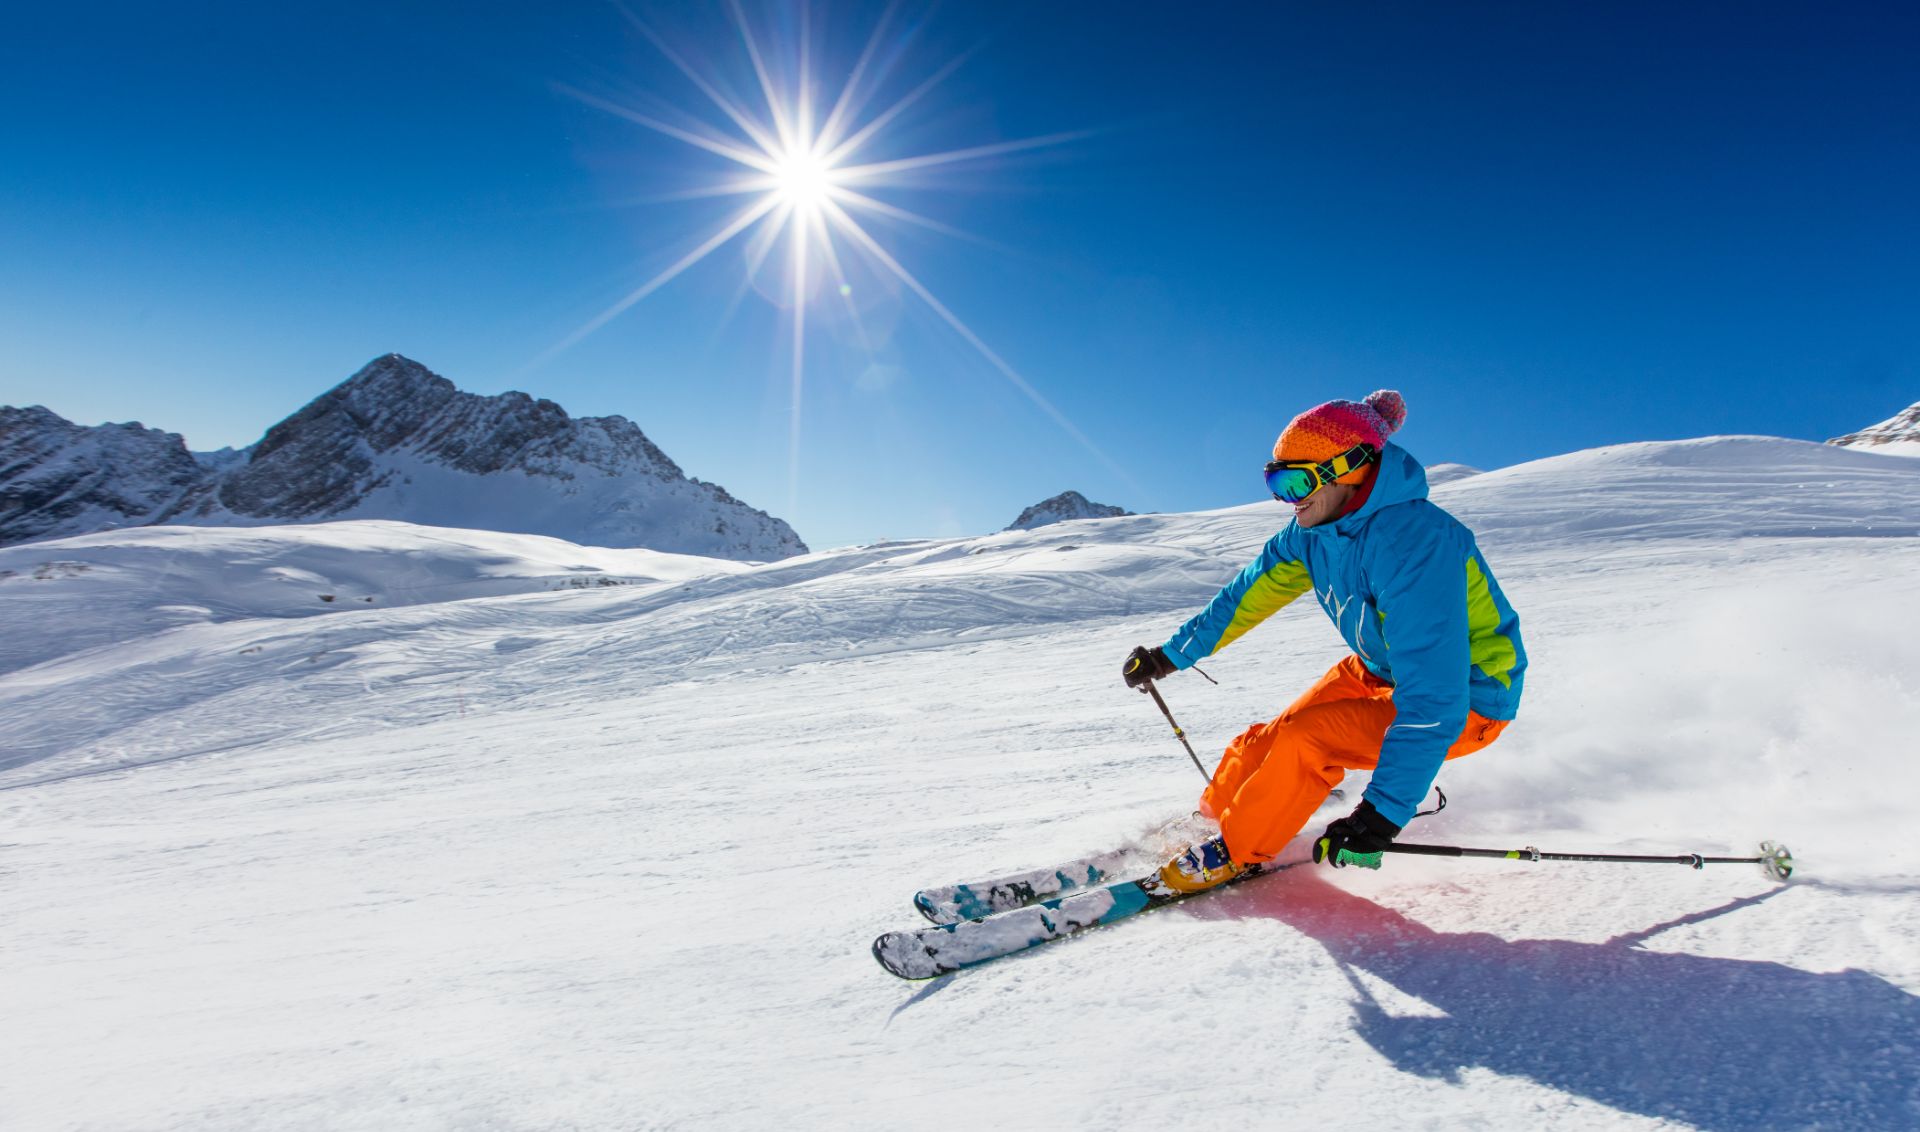 Ski Injuries: The Season isn’t over yet